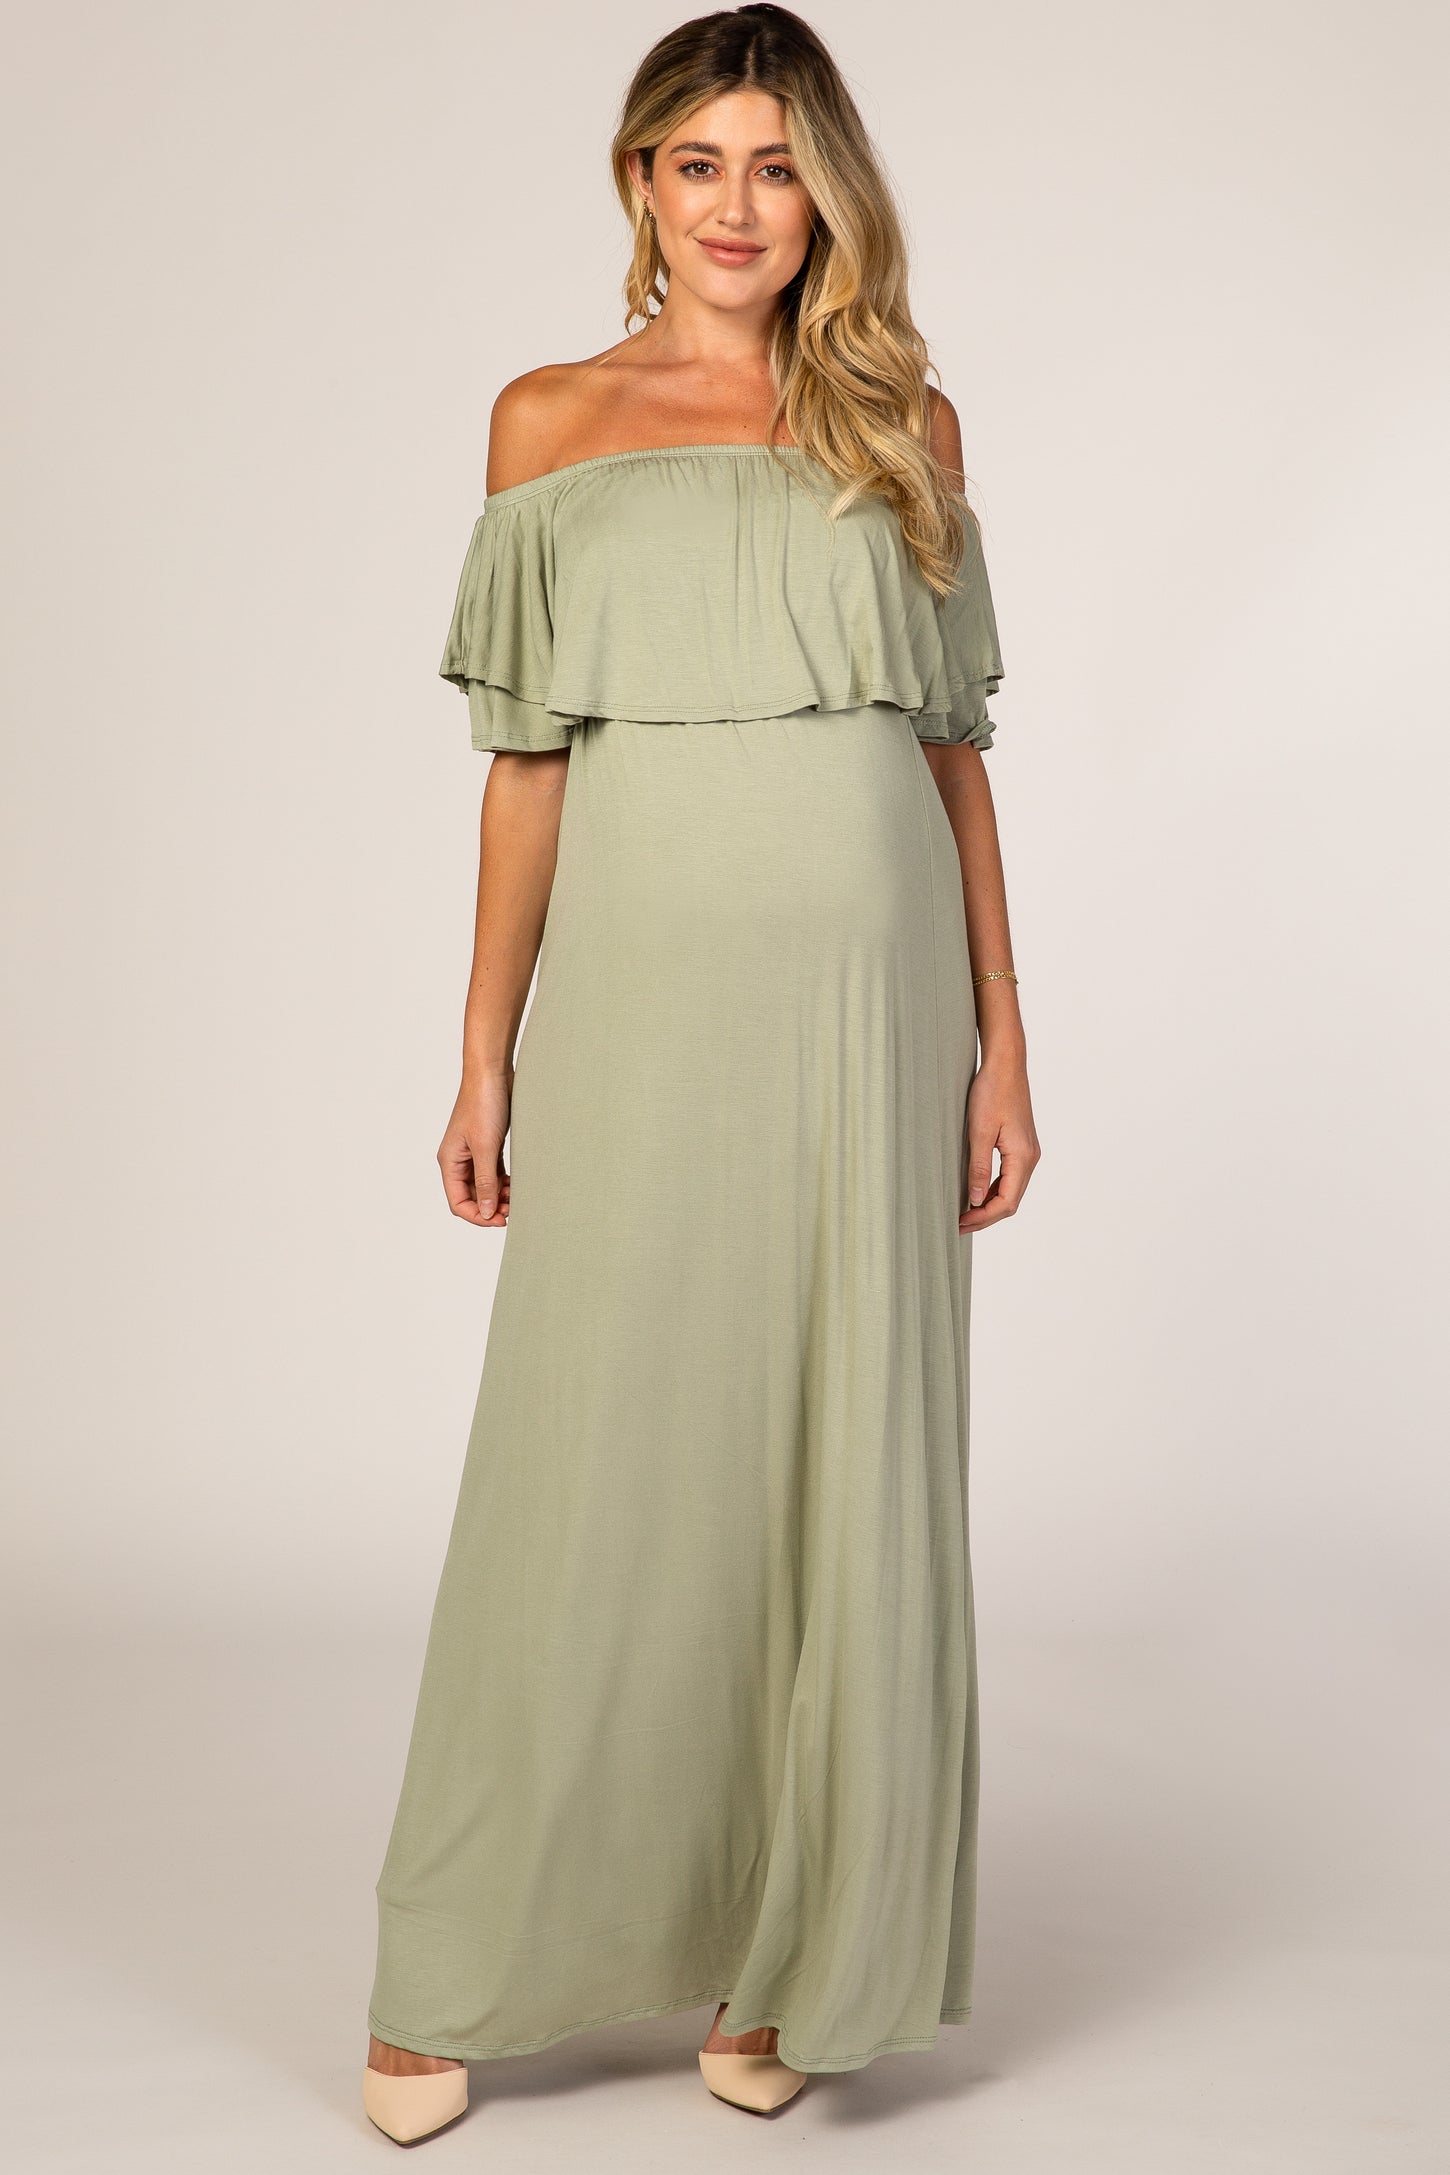 Mint Green Off Shoulder Ruffle Trim Maternity Maxi Dress – PinkBlush